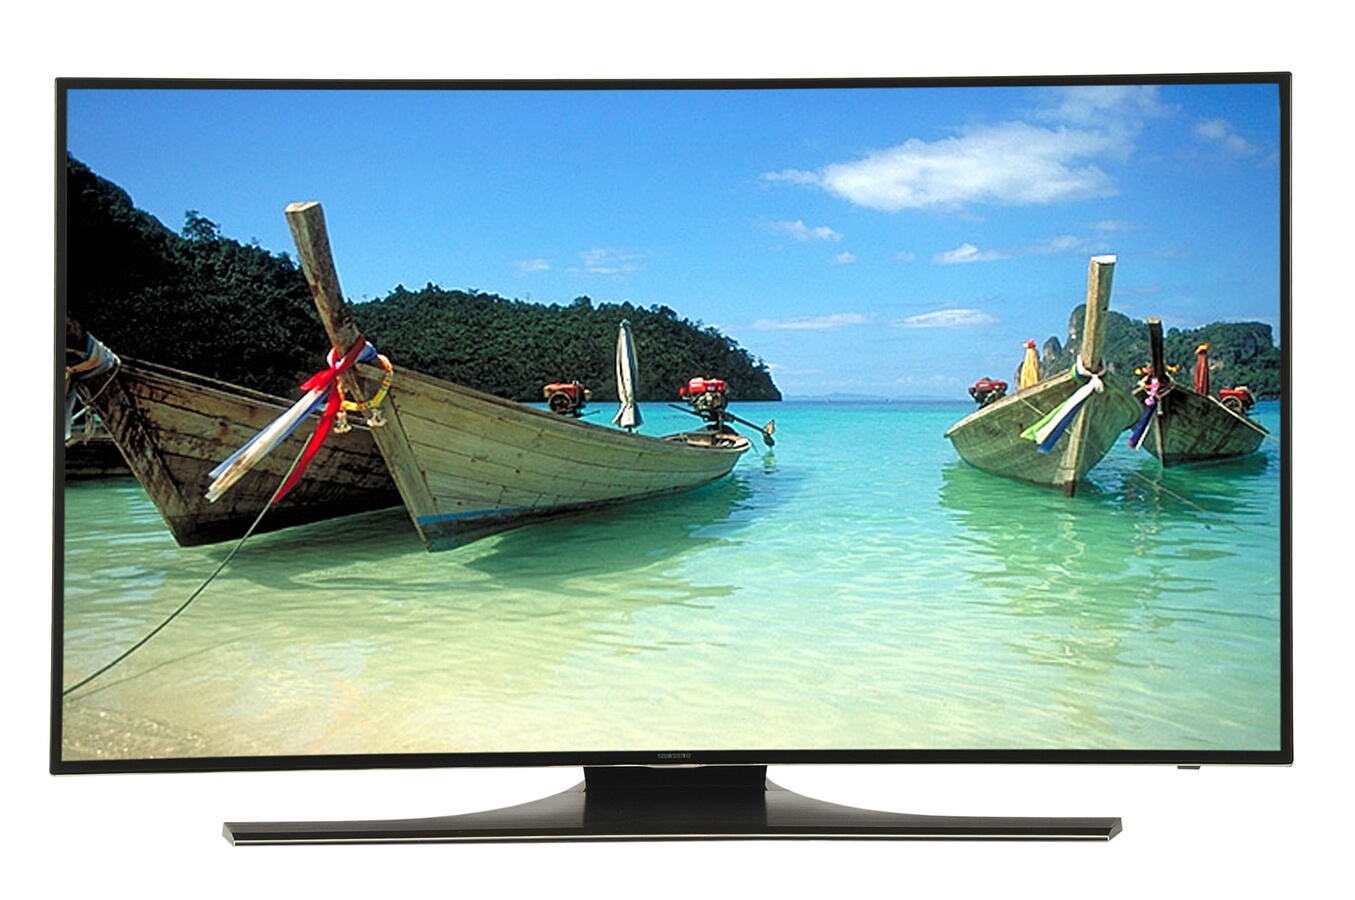 TV LED Samsung UE48H6850 SMART 3D C 48h6850 (4035976) | Darty